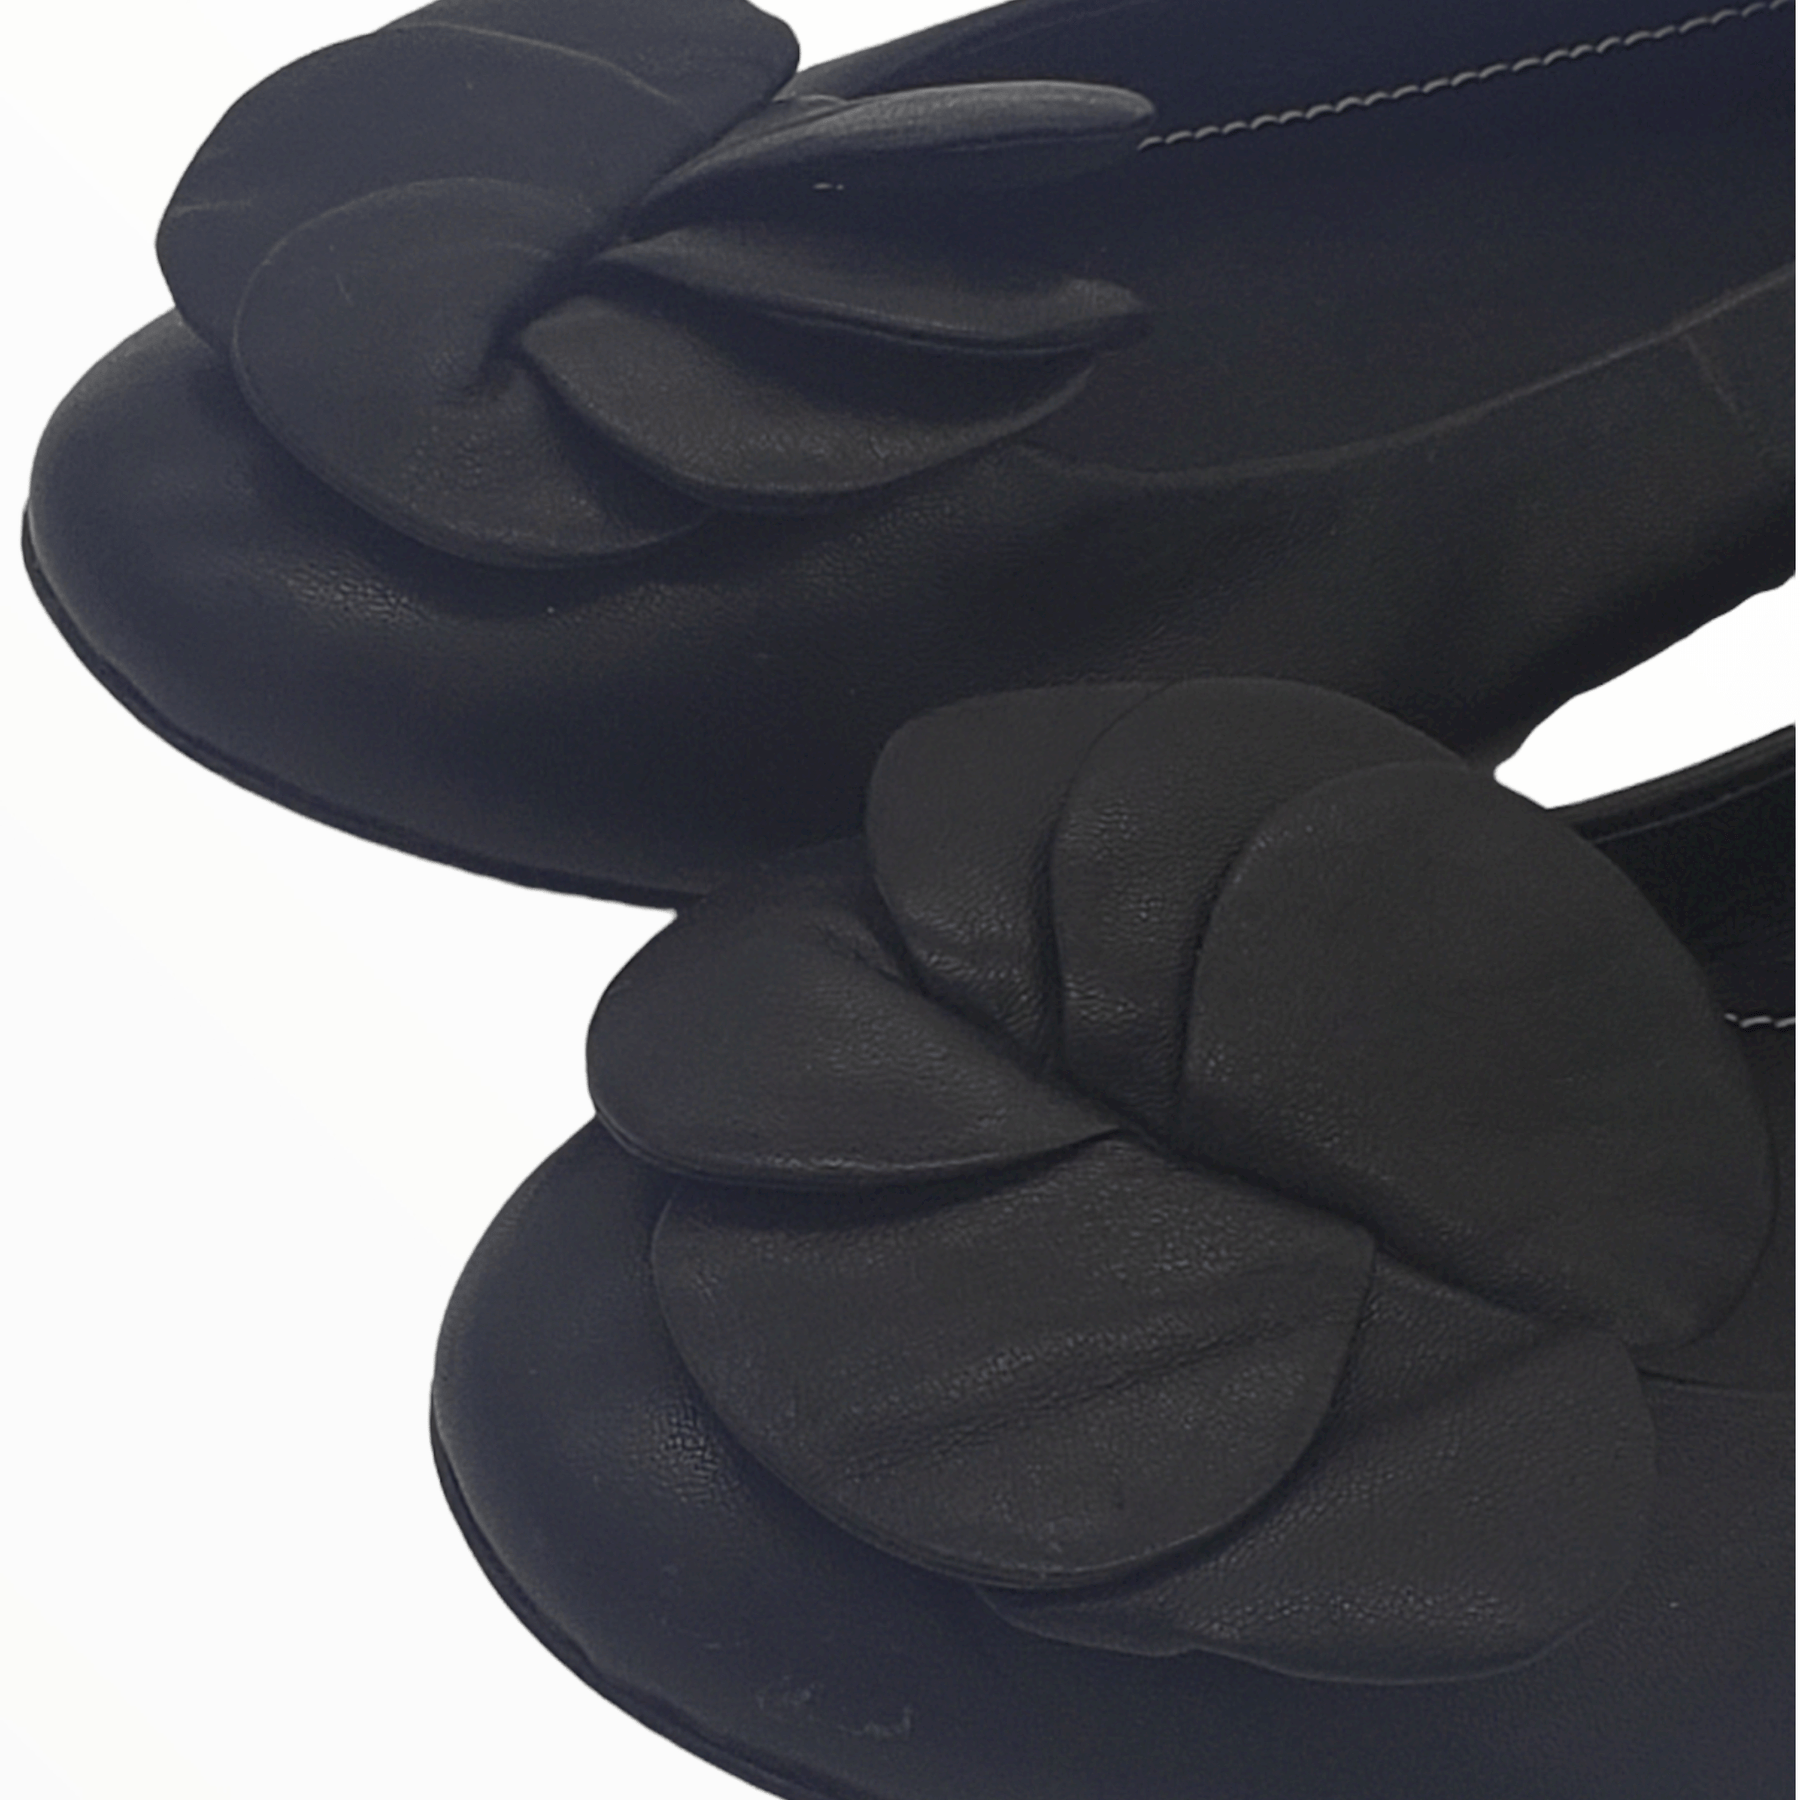 Sonia Rykiel Black Floral Detail Flash Shoes